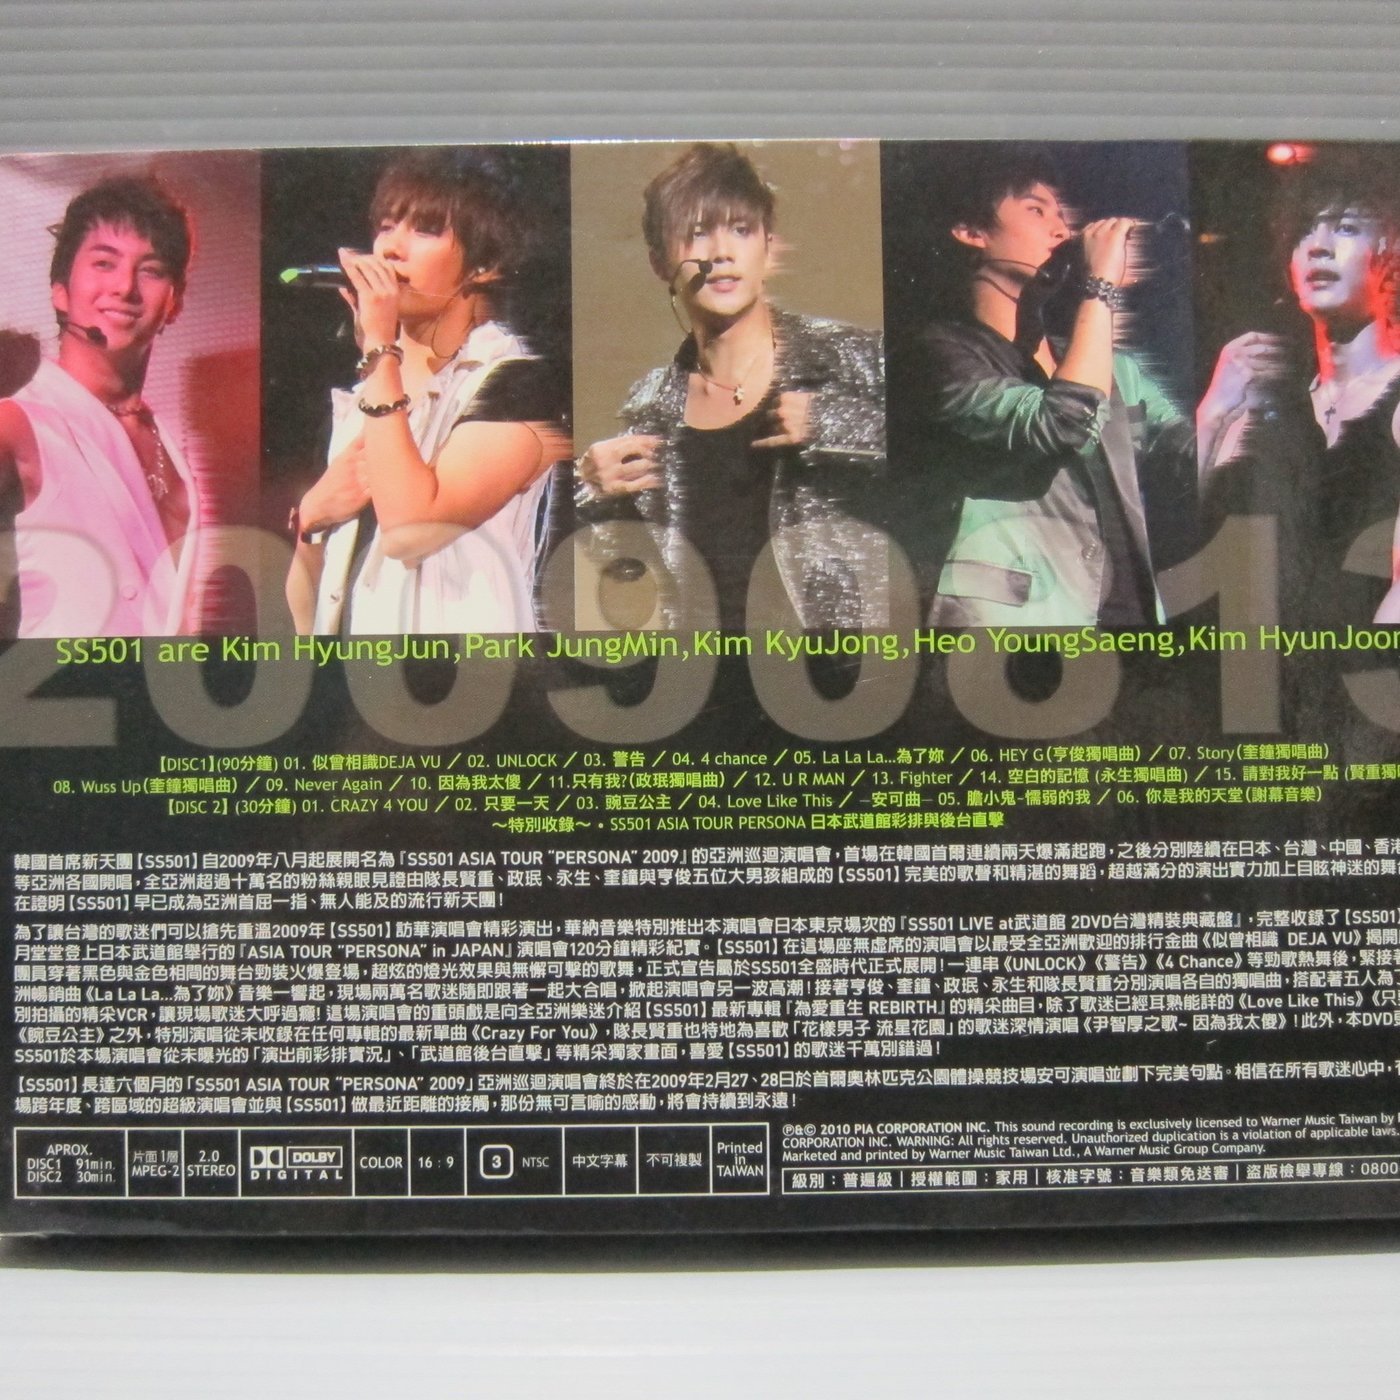 SS501 LIVE at武道館 韓國首席天團 獨霸亞洲巡迴演唱會 日本東京場 15張寫真照 2DVD片新 外紙盒美